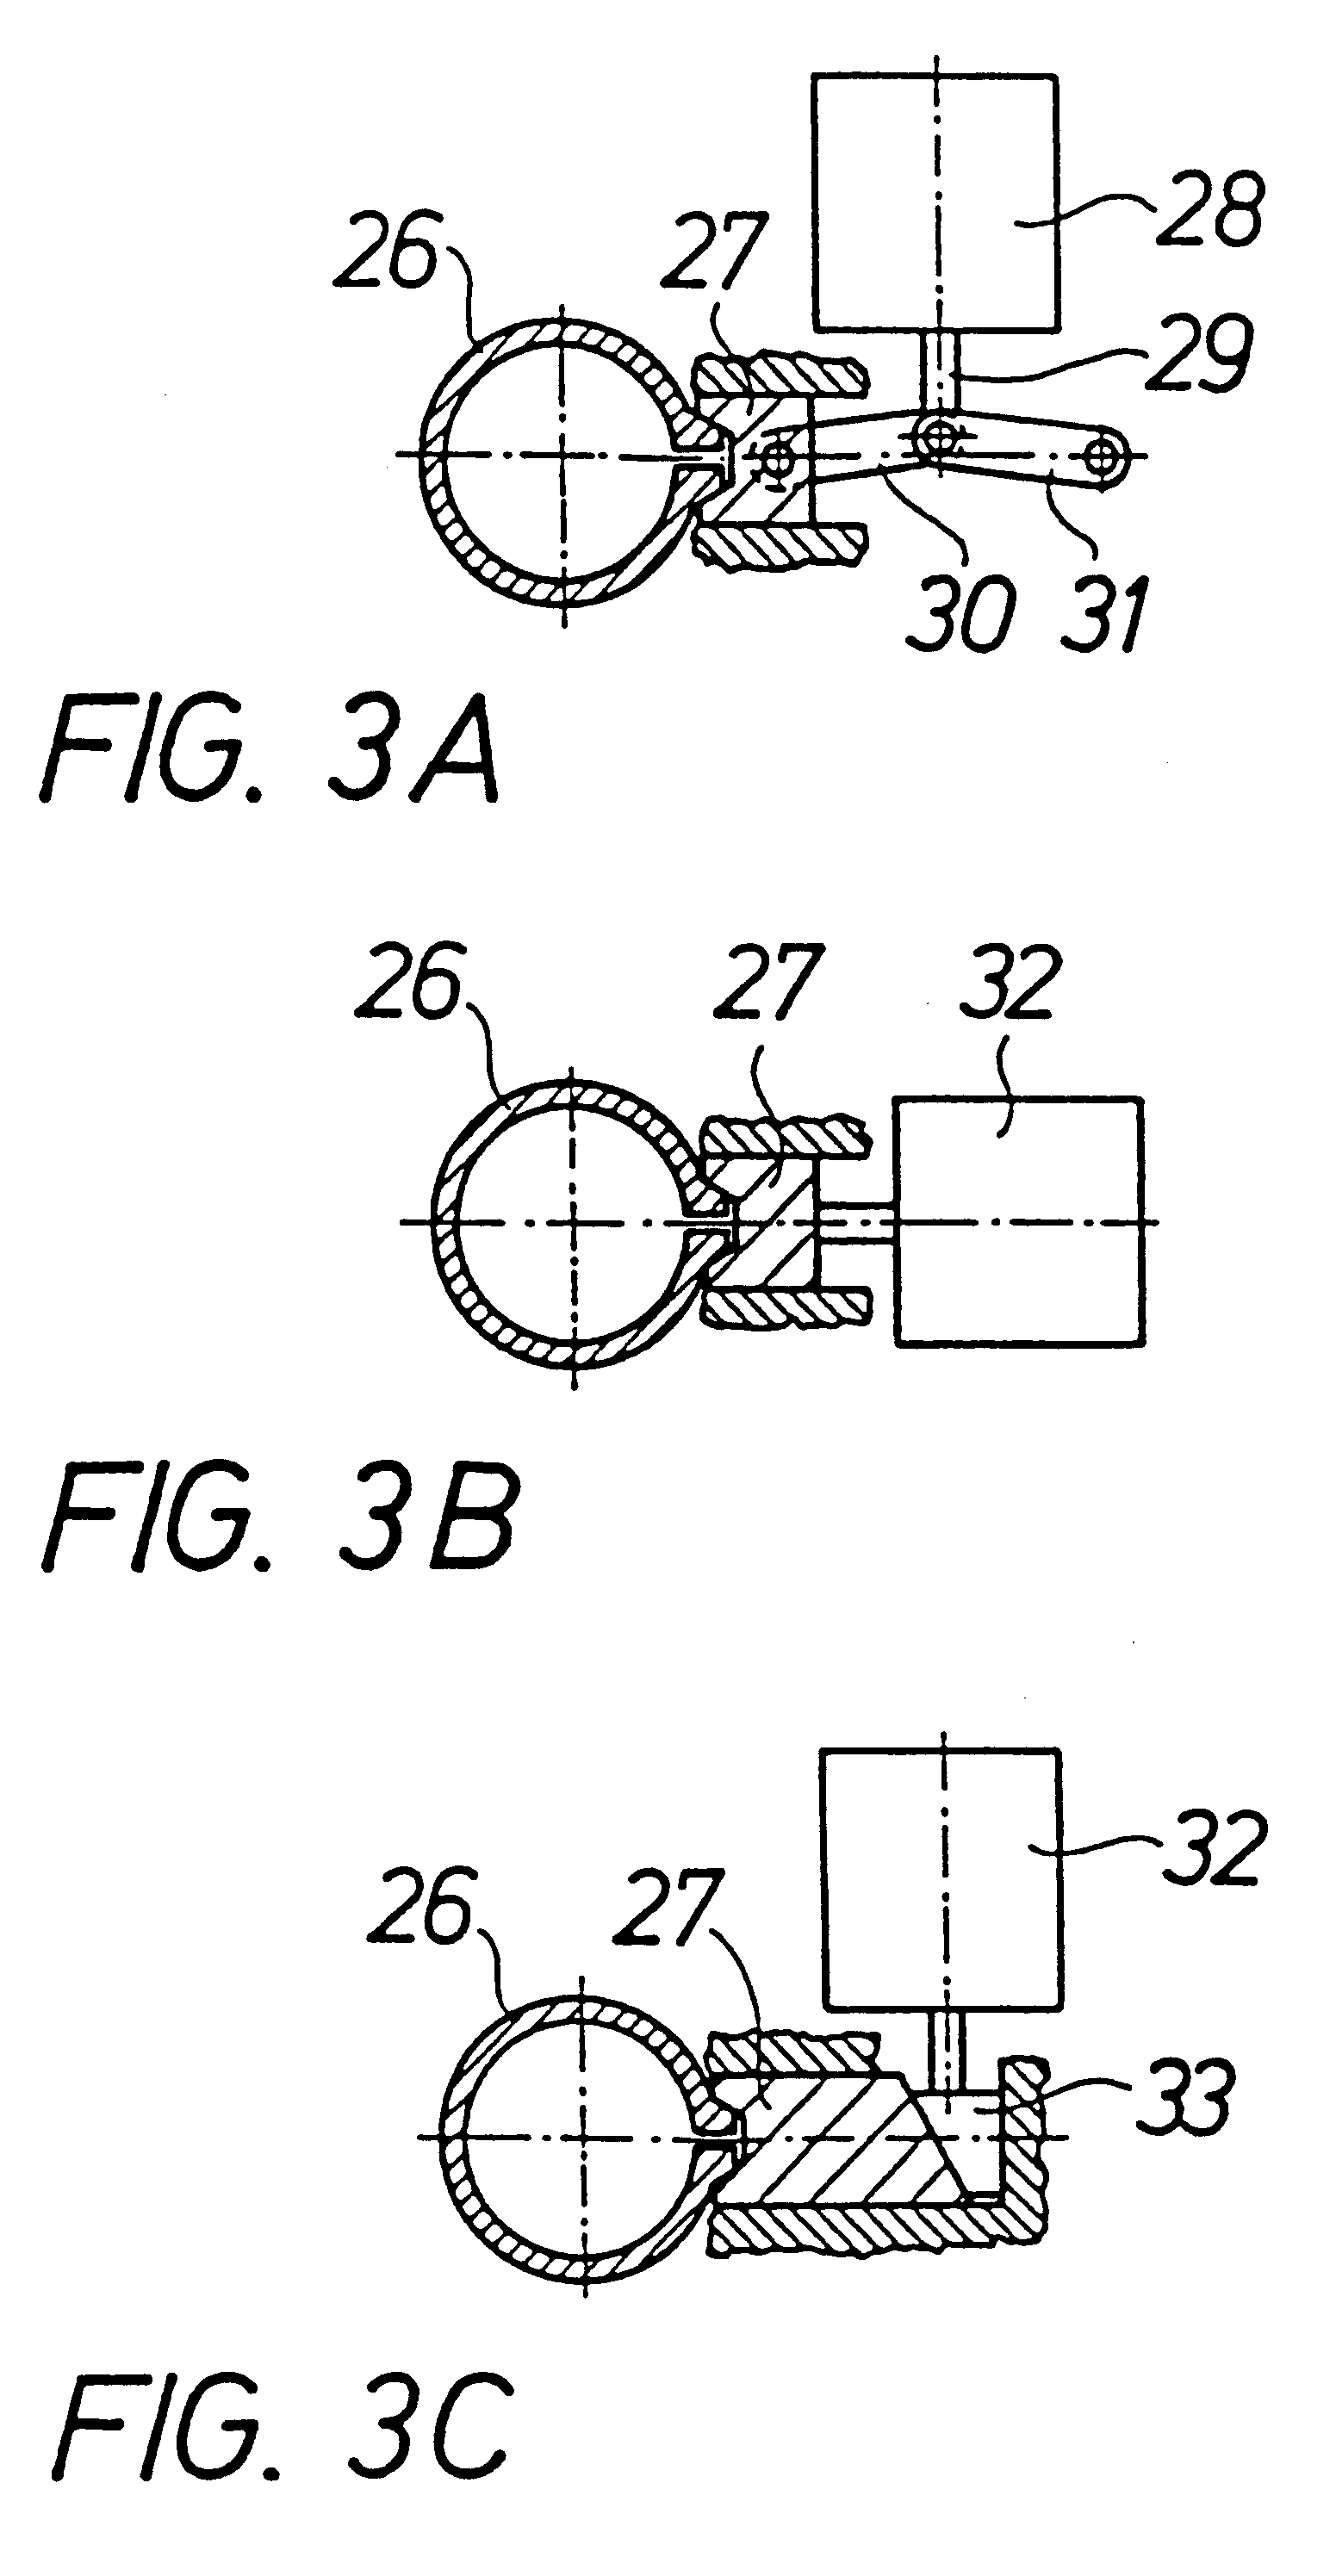 Safety brake arrangement in a brake actuator